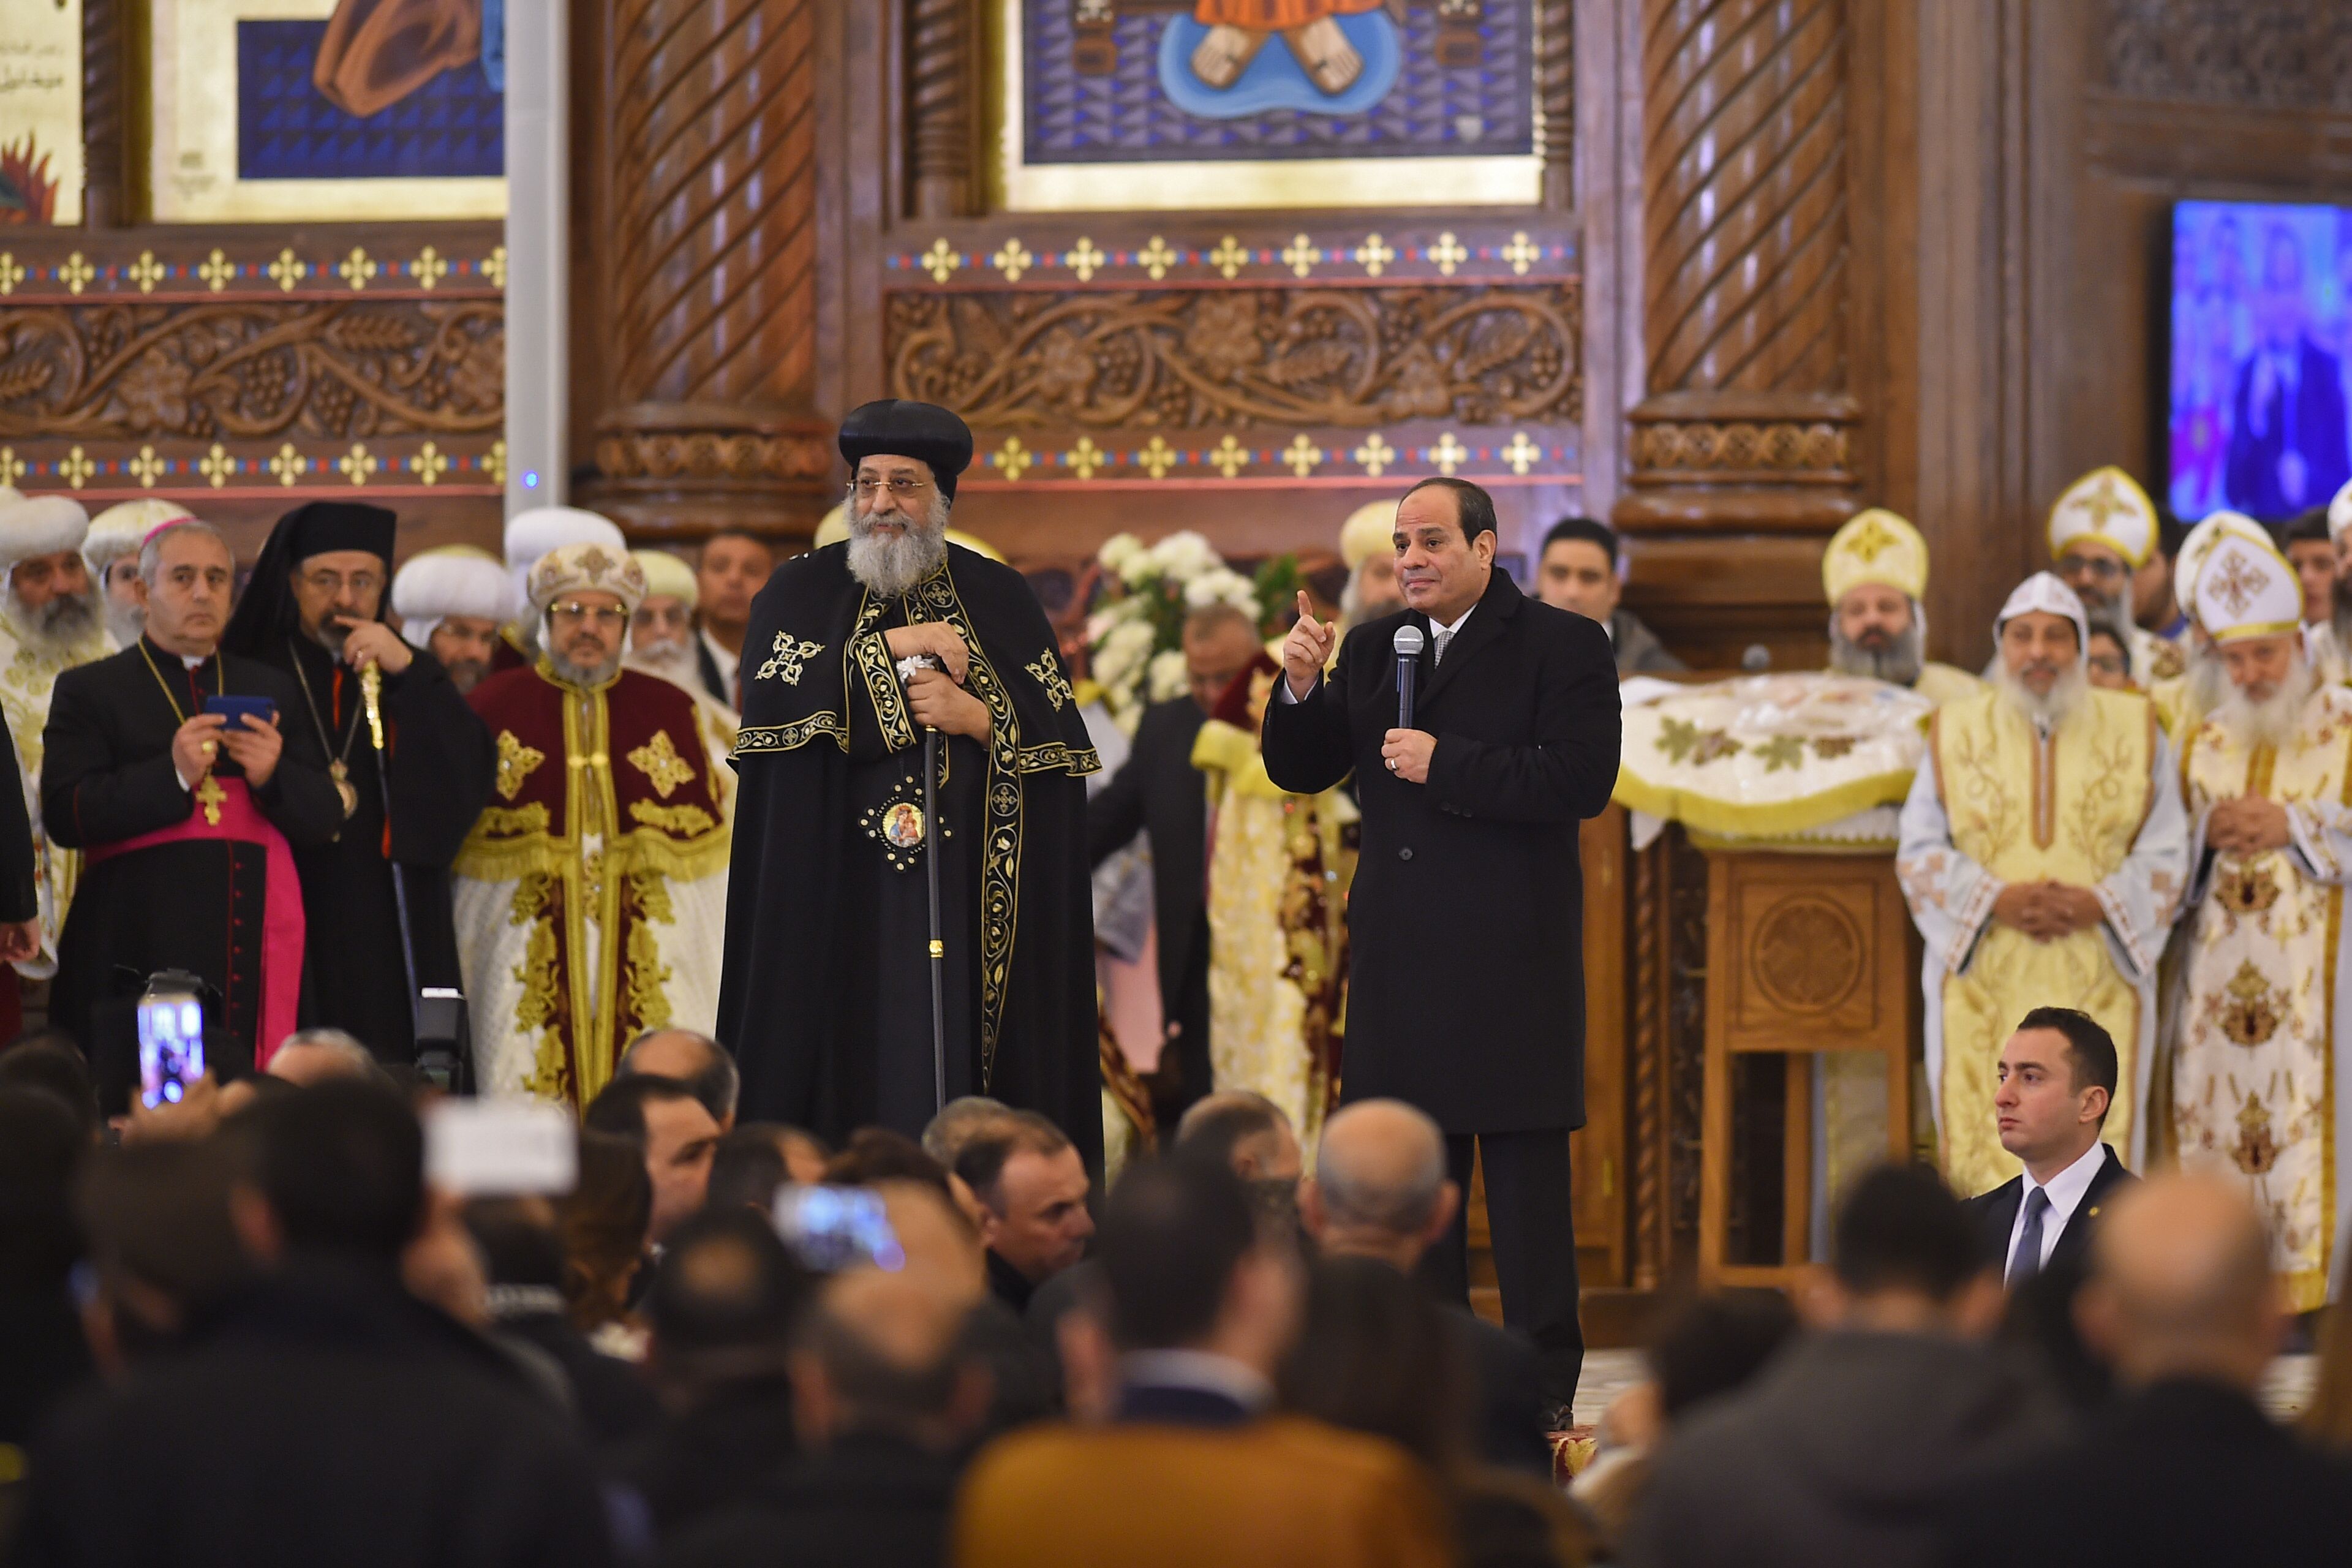 Fotol keskel kopti kiriku paavst Tawadros II ja president Abdel Fattah al-Sisi. Foto: Mohamed el-Shahed / AFP /Scanpix